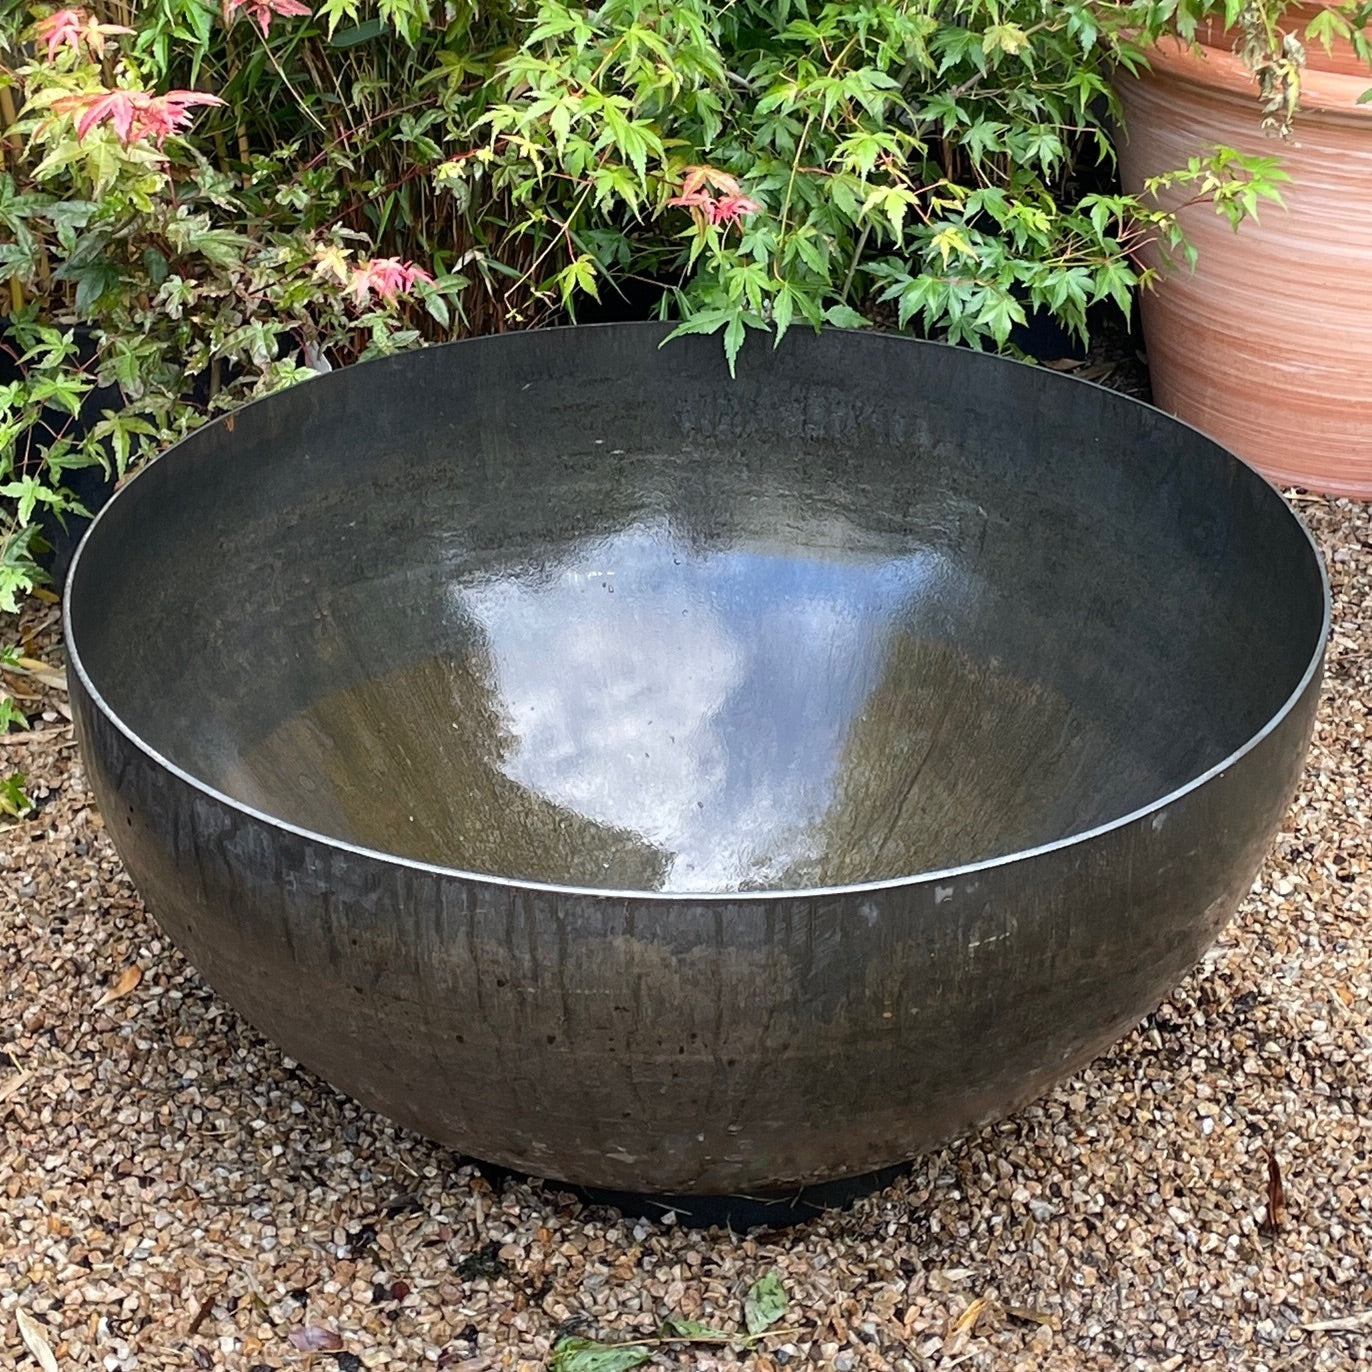 Corten water bowl / planter / fire bowl (80cm wide x 41cm deep)